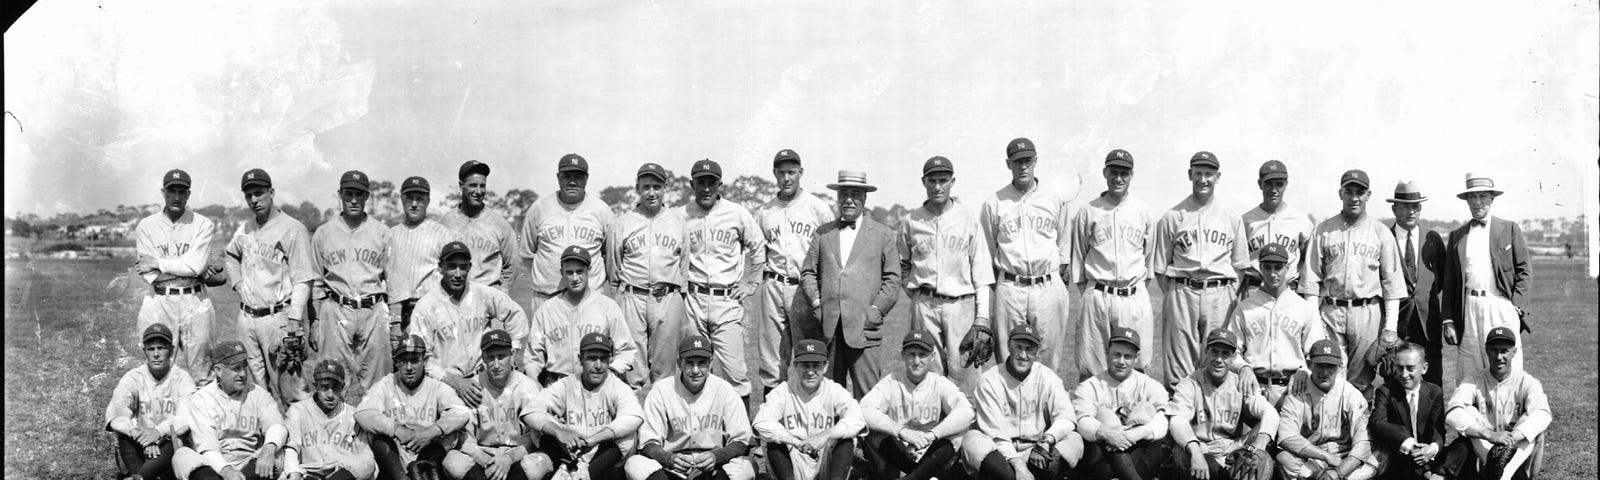 1927 Yankees – 1927: The Diary of Myles Thomas